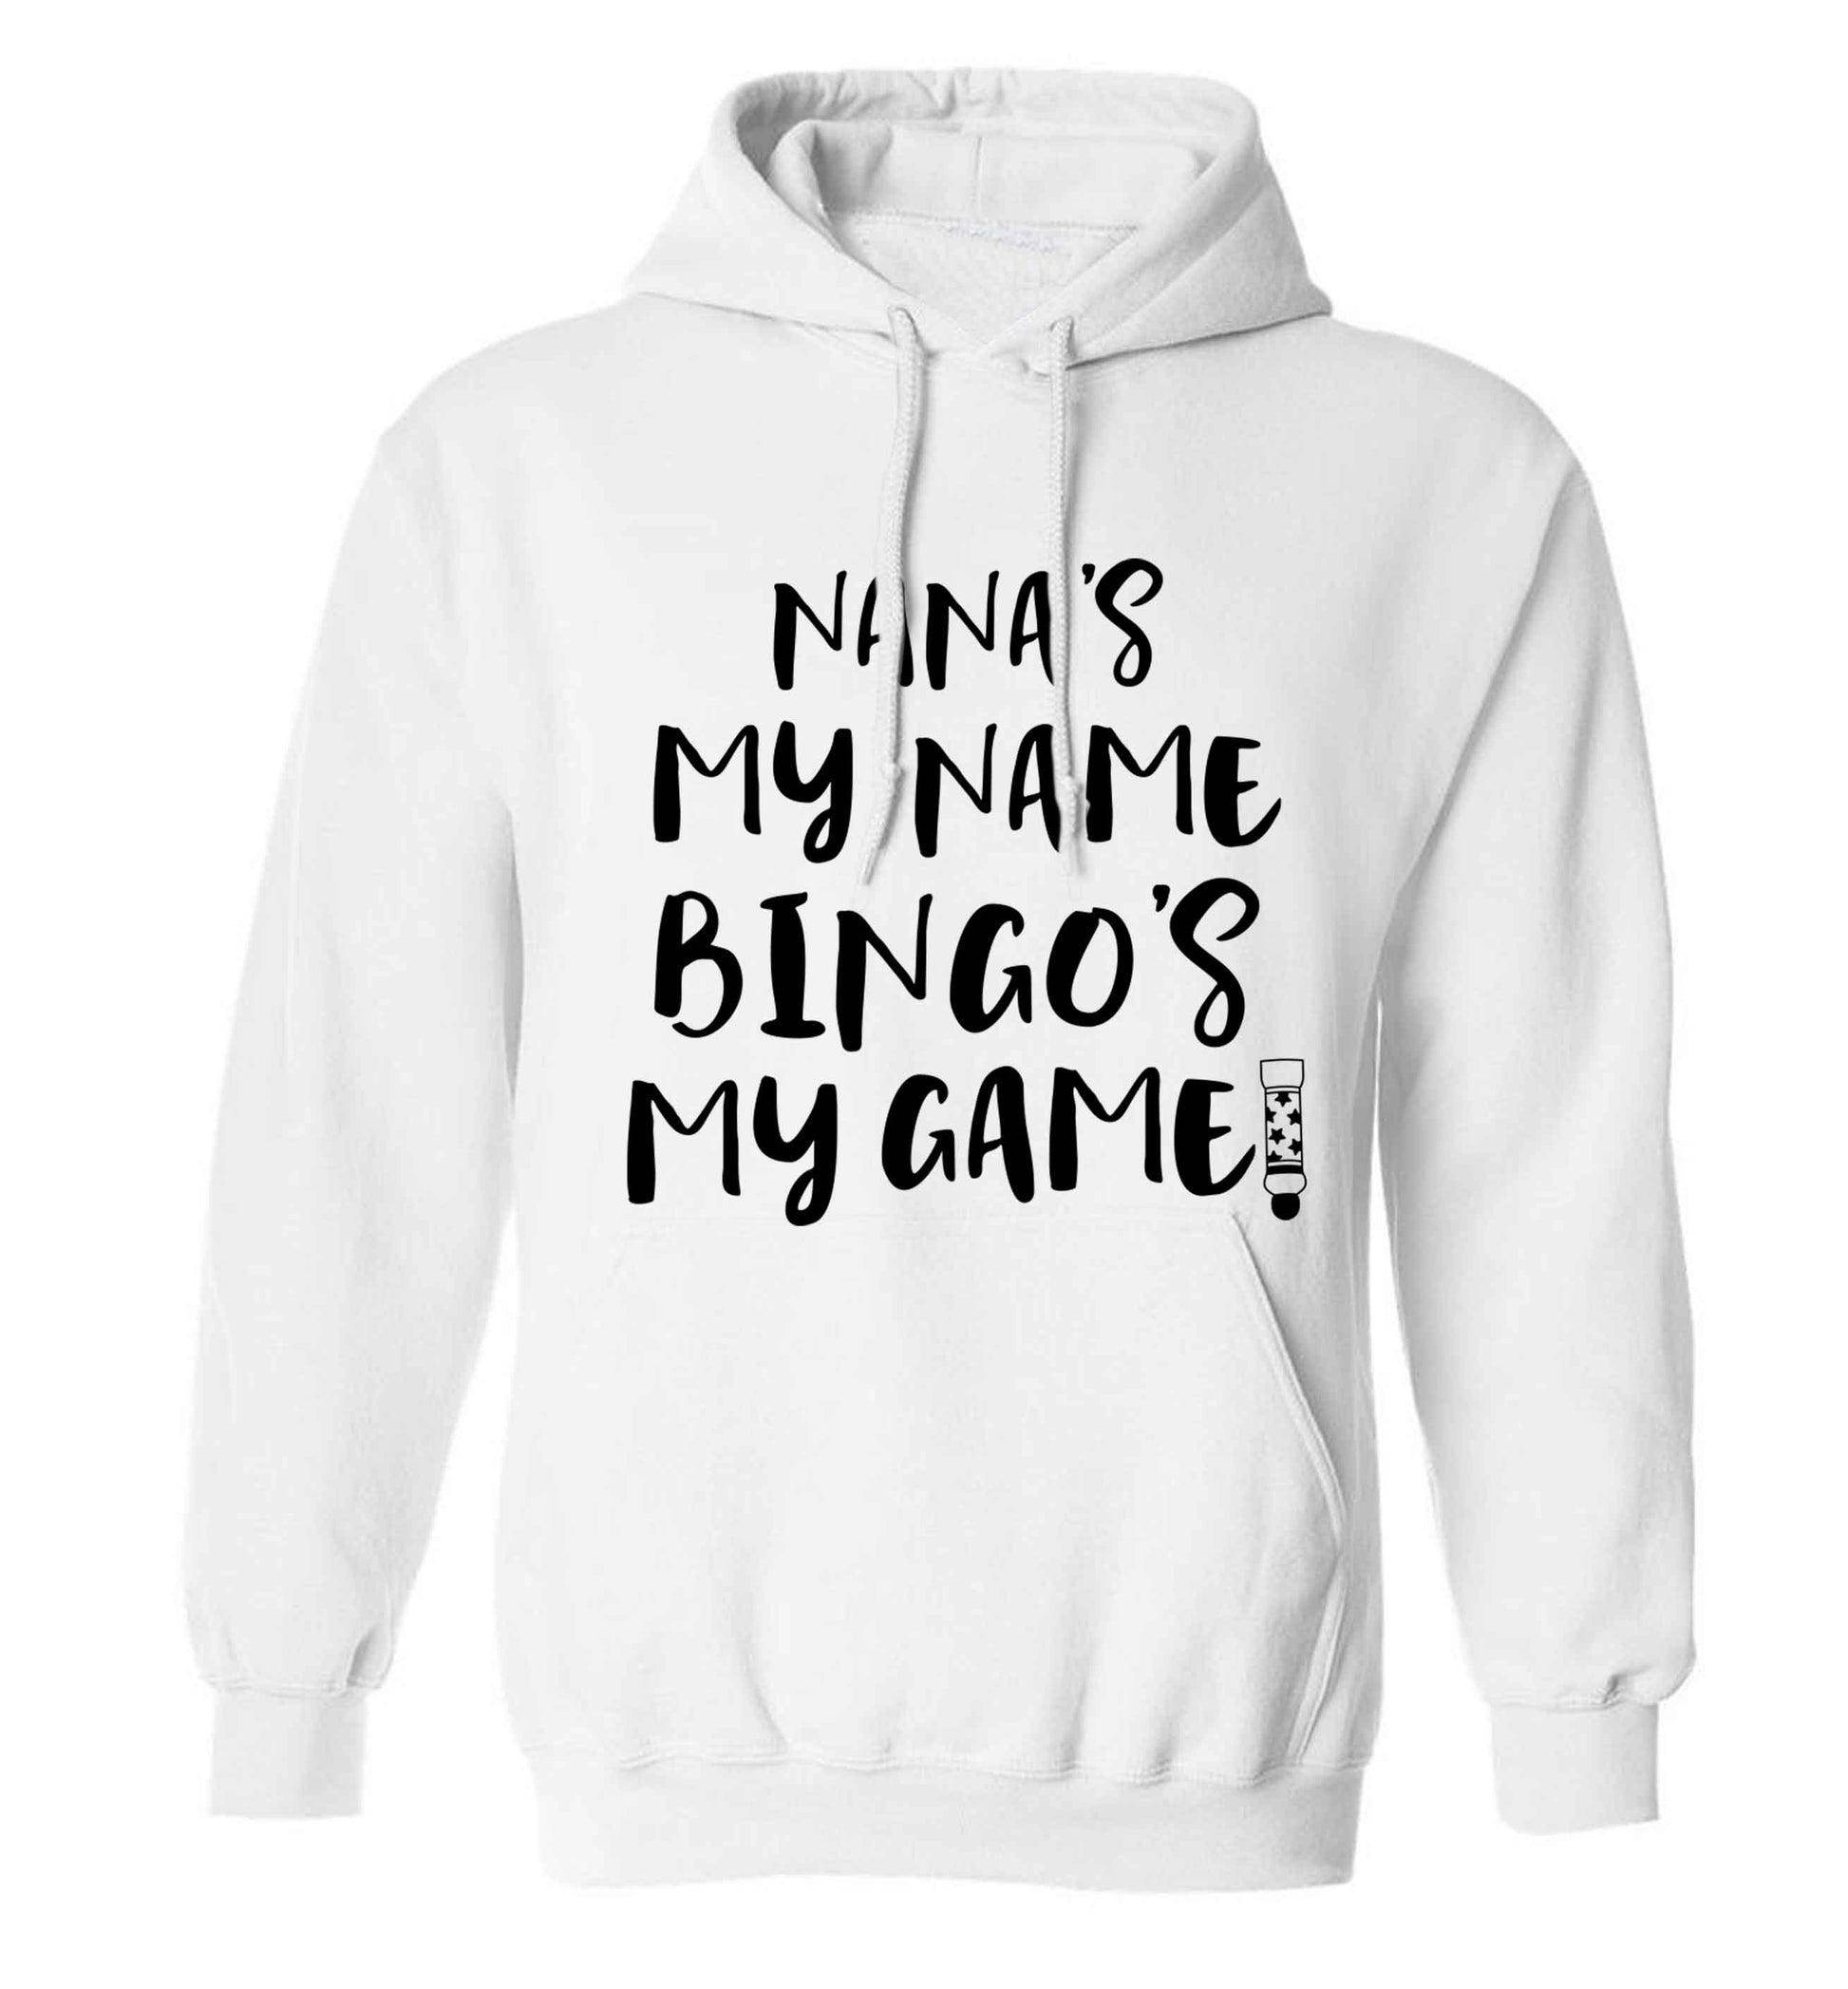 Nana's my name bingo's my game! adults unisex white hoodie 2XL